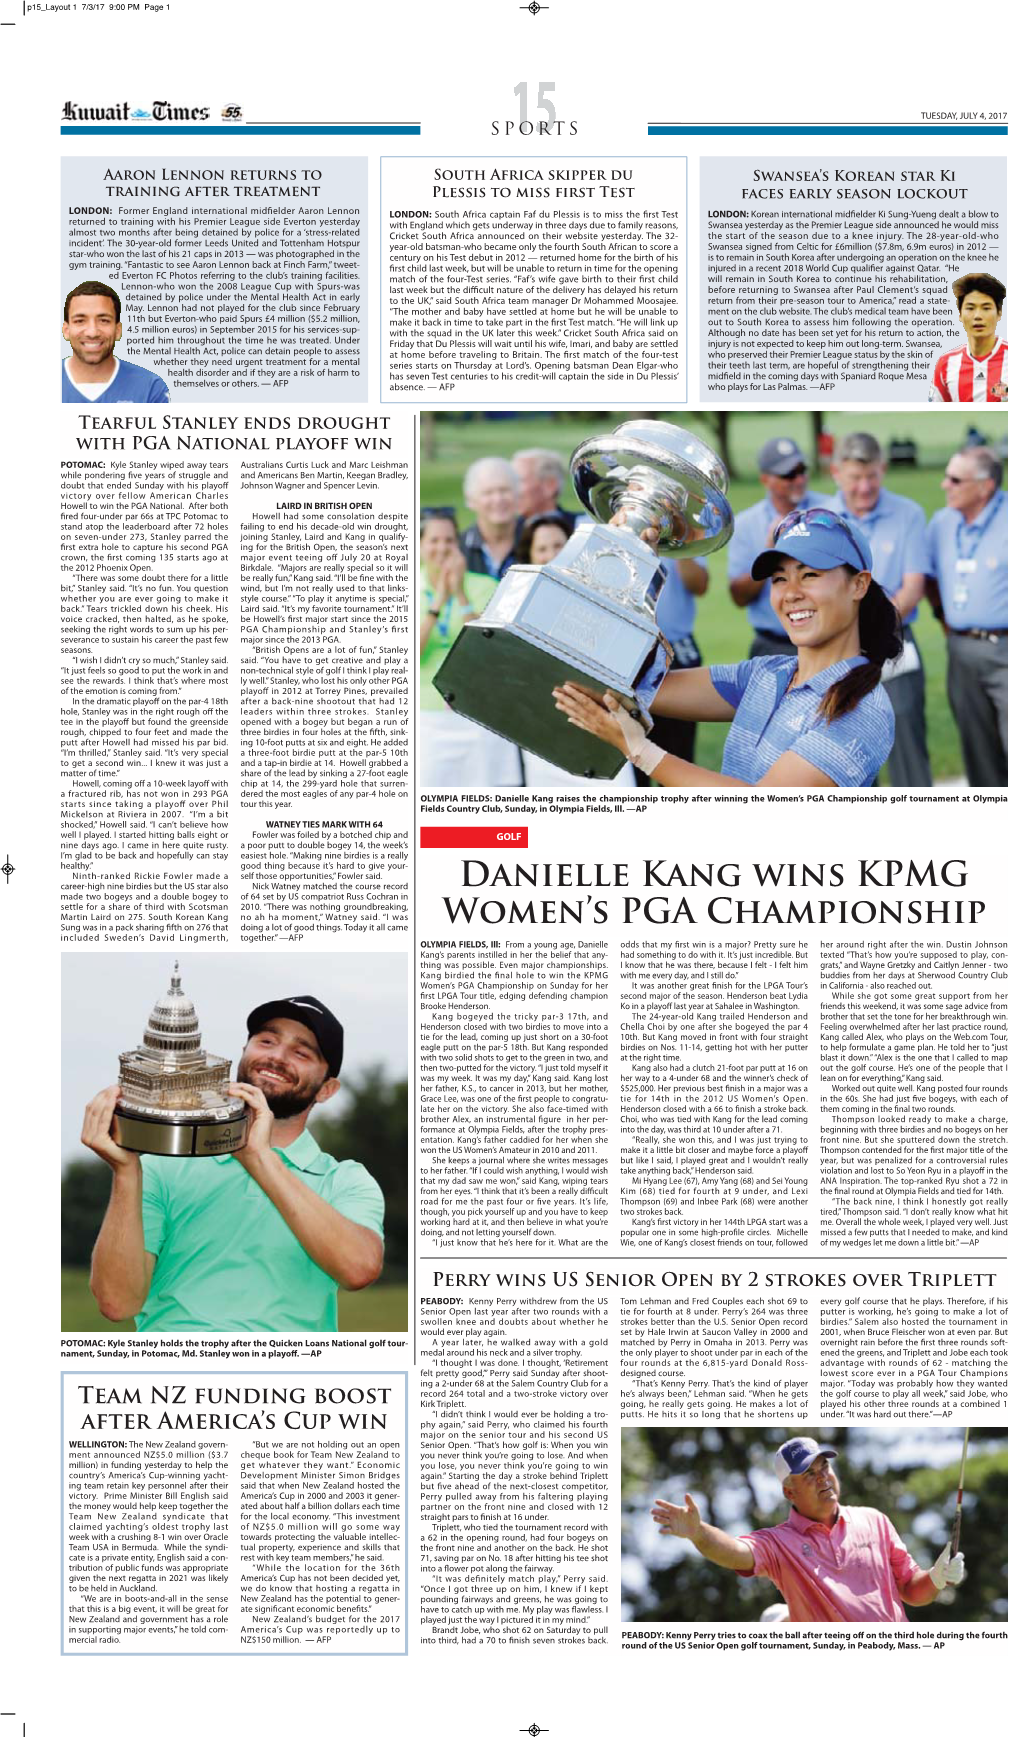 DANIELLE KANG Wins KPMG WOMEN's PGA